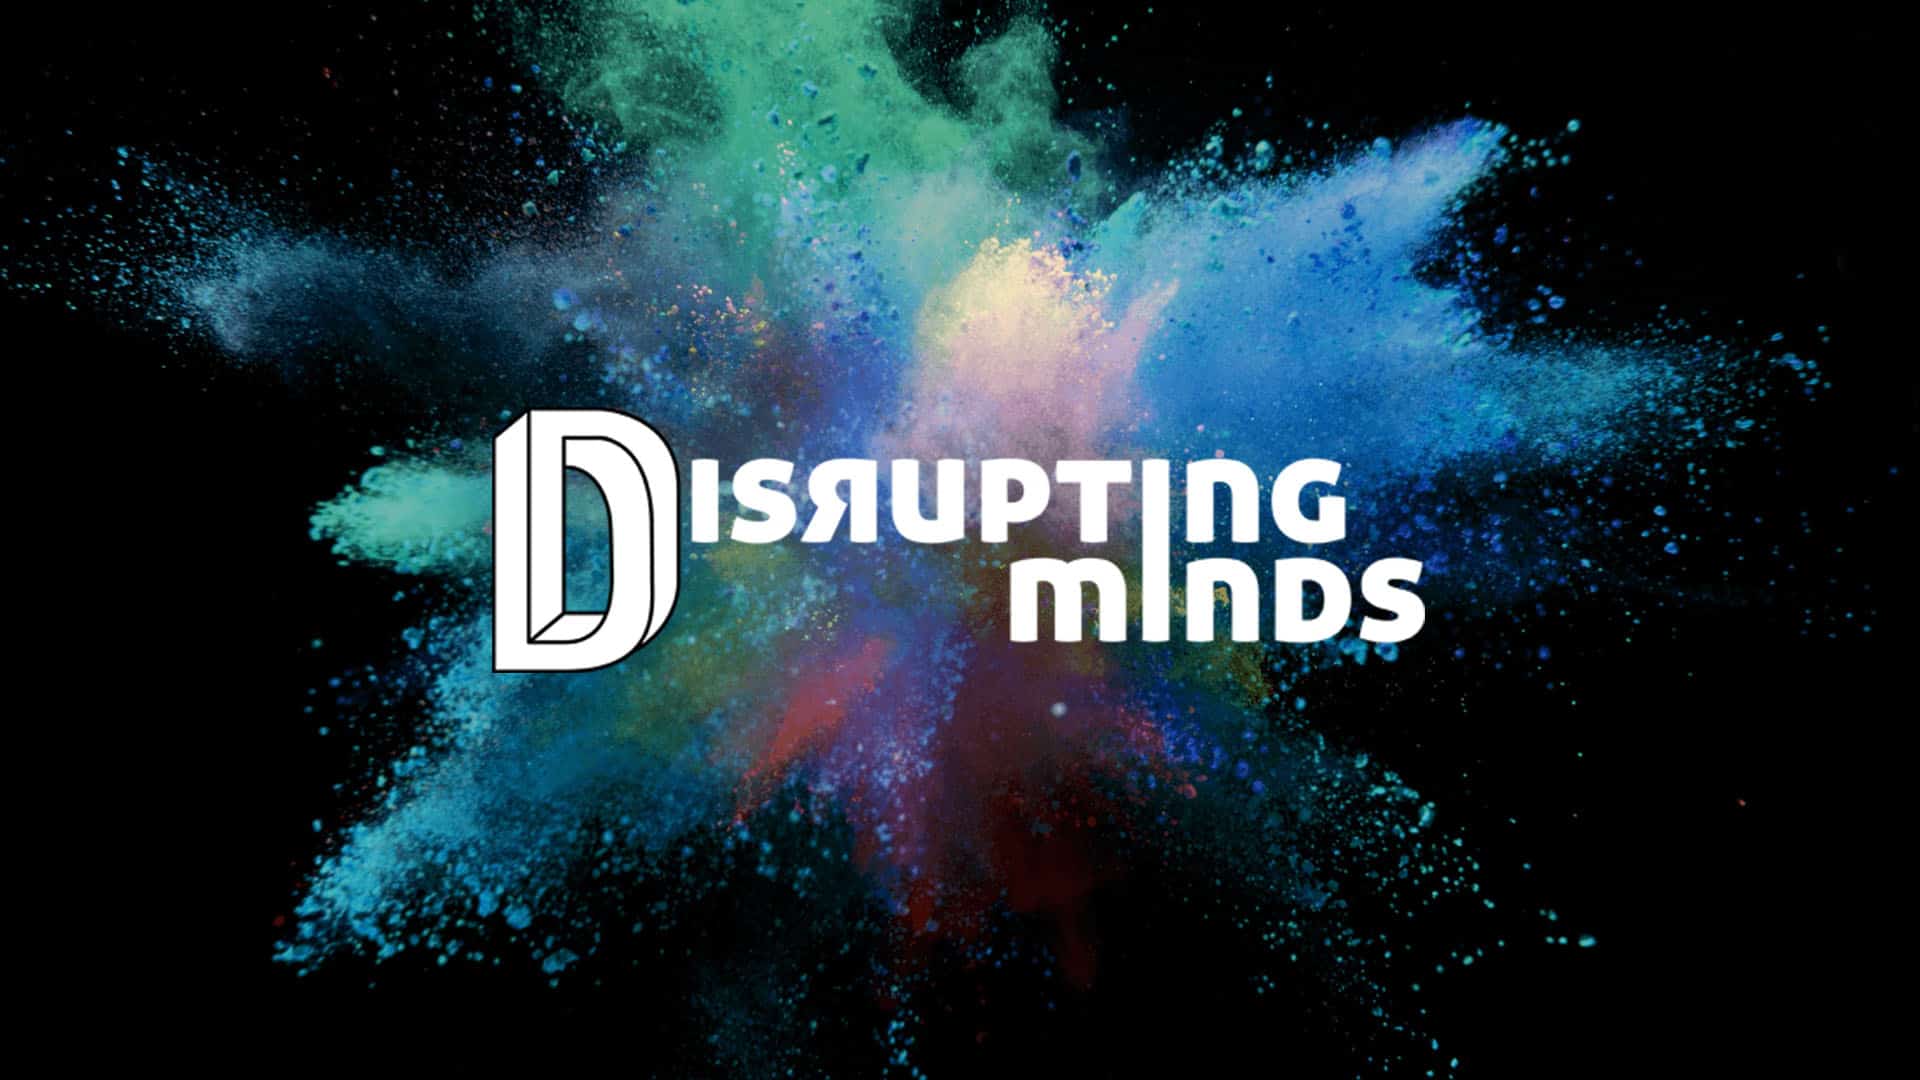 (c) Disruptingminds.com